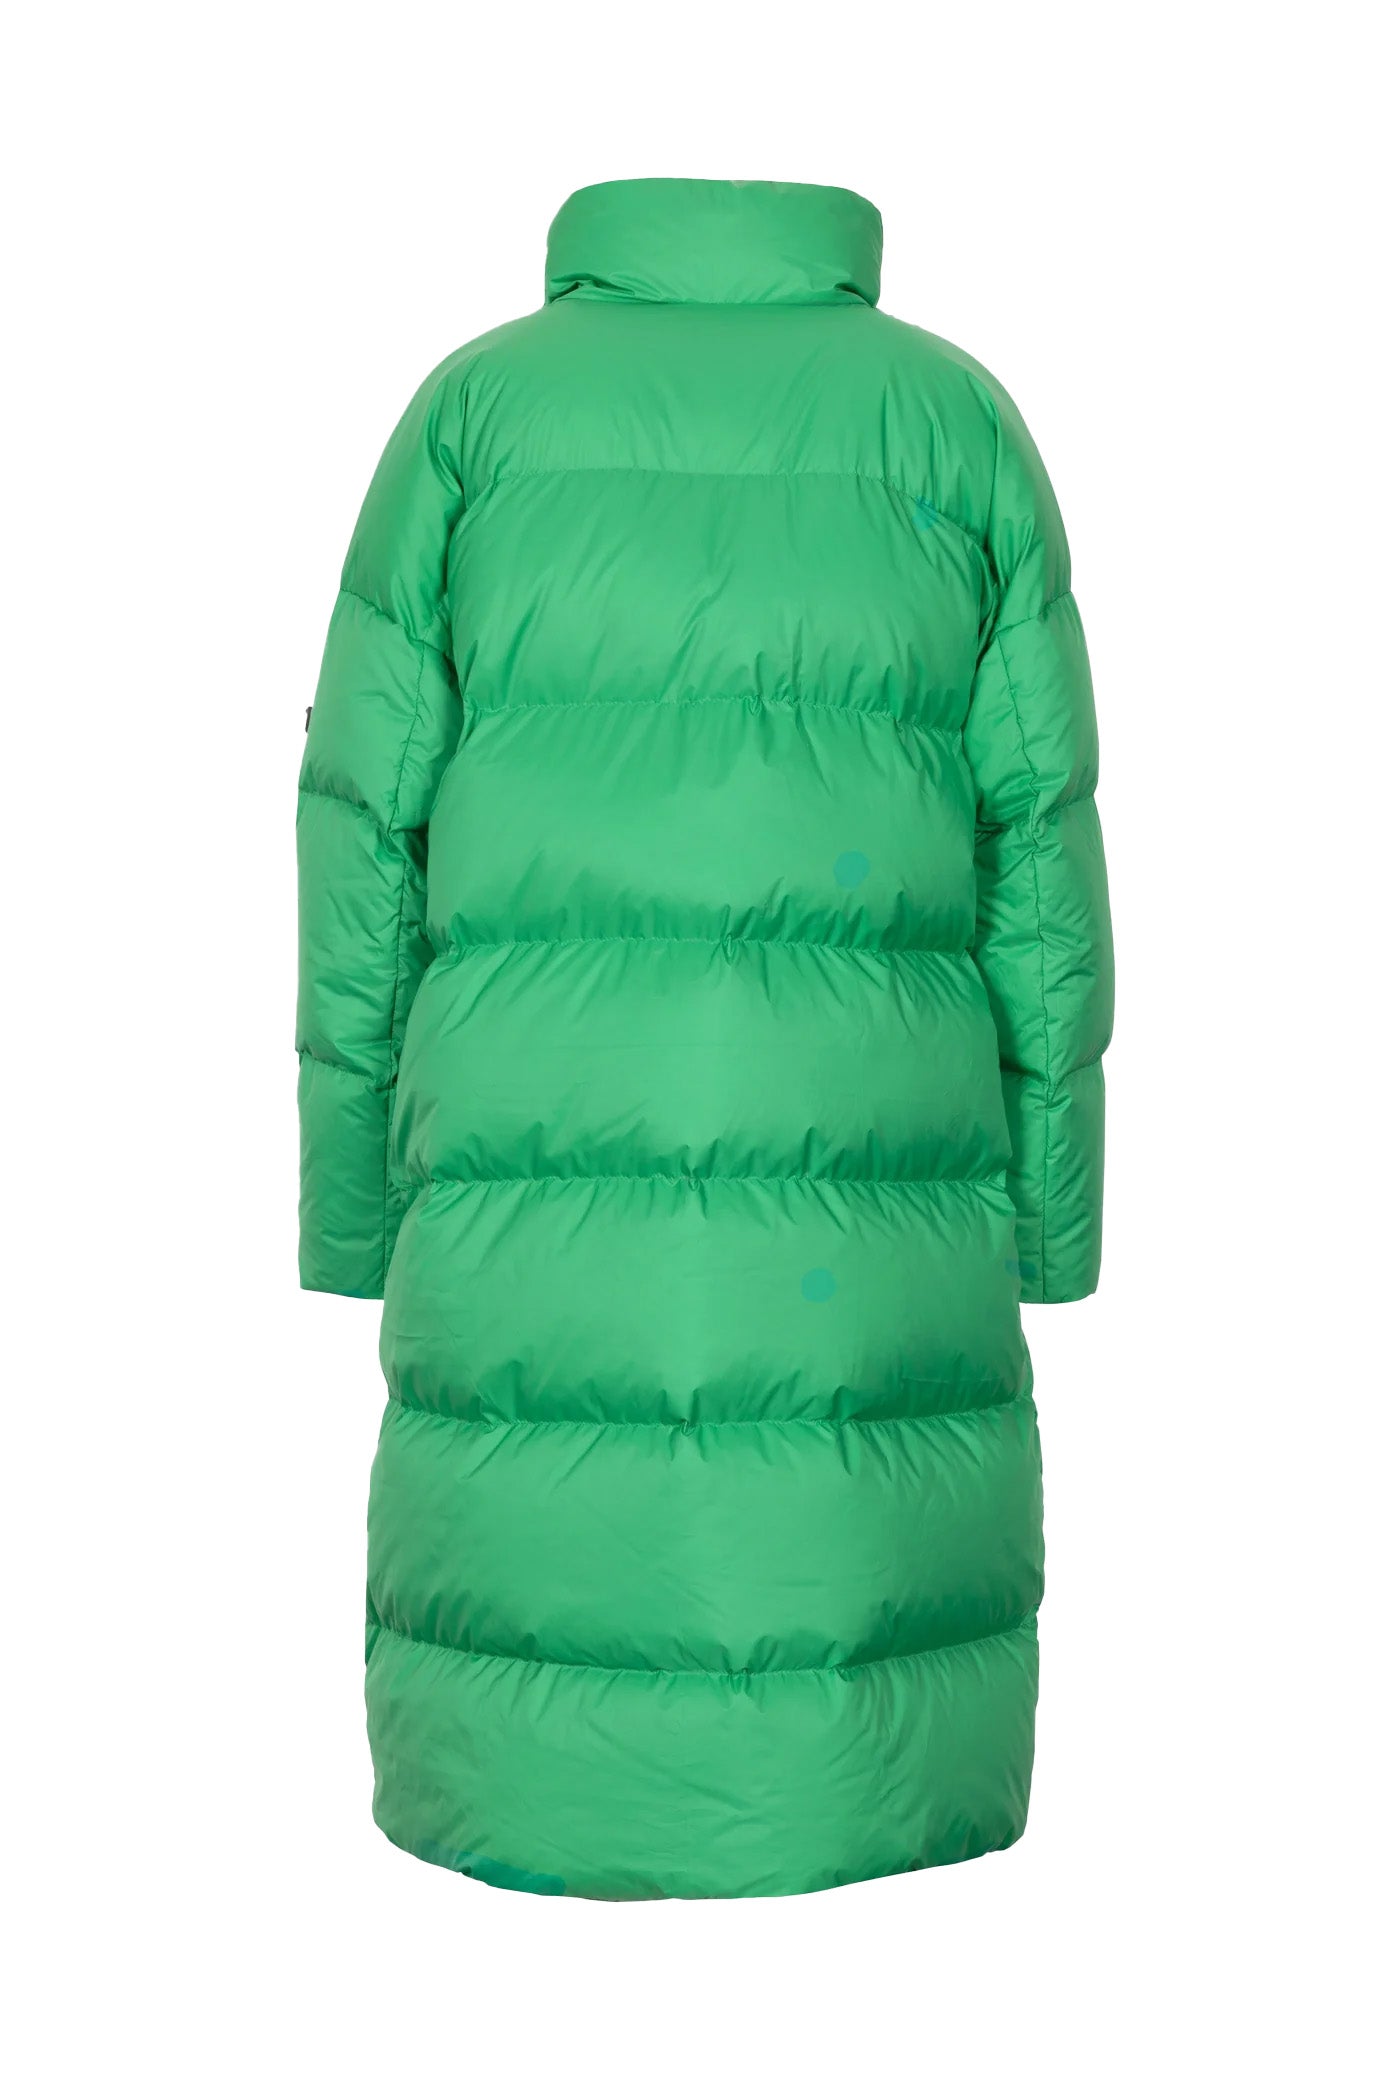 Oversized Lempelius wrap down coat in bright green